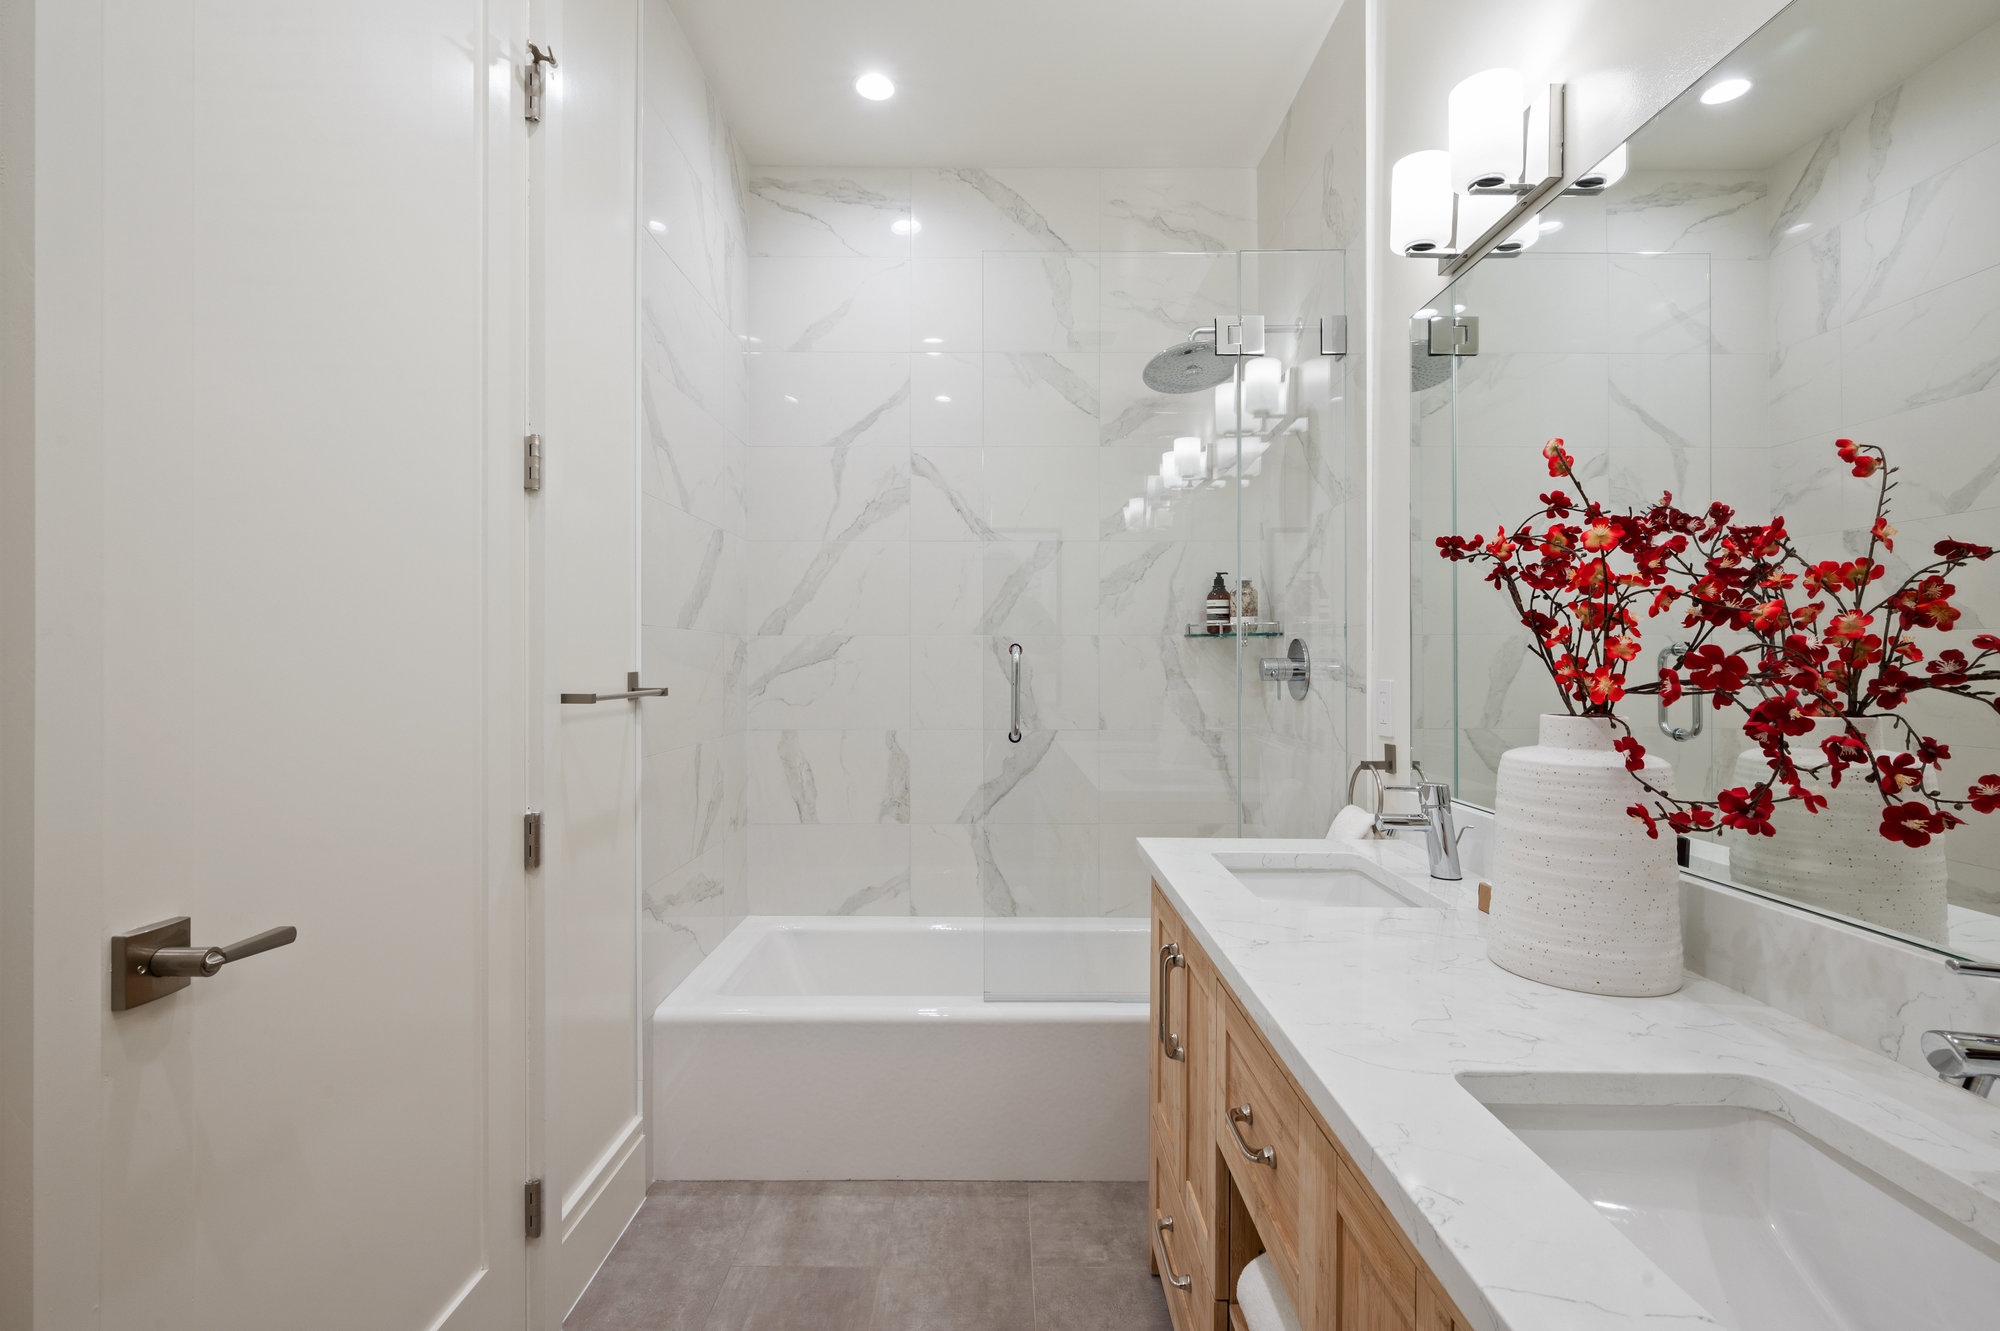 Property Photo: Primary bathroom. White walls, bath tiles and double vanity. 